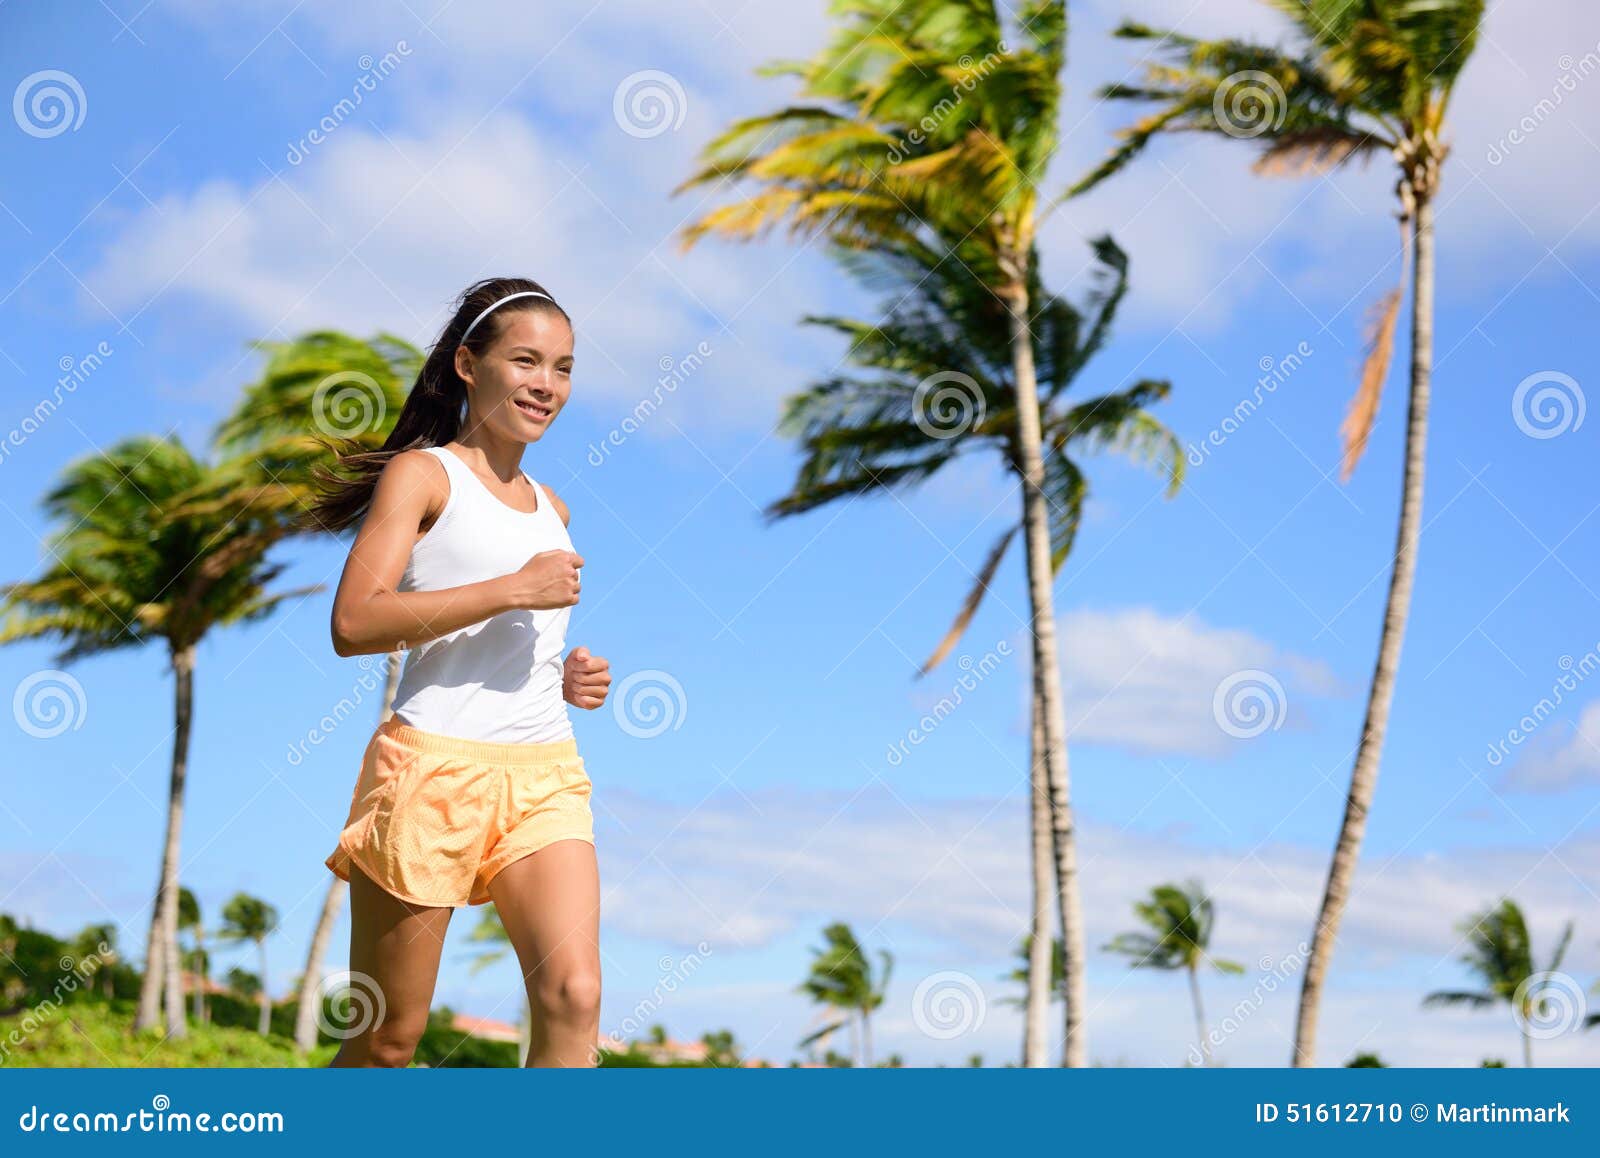 106,390 Girl Jogging Stock Photos - Free & Royalty-Free Stock